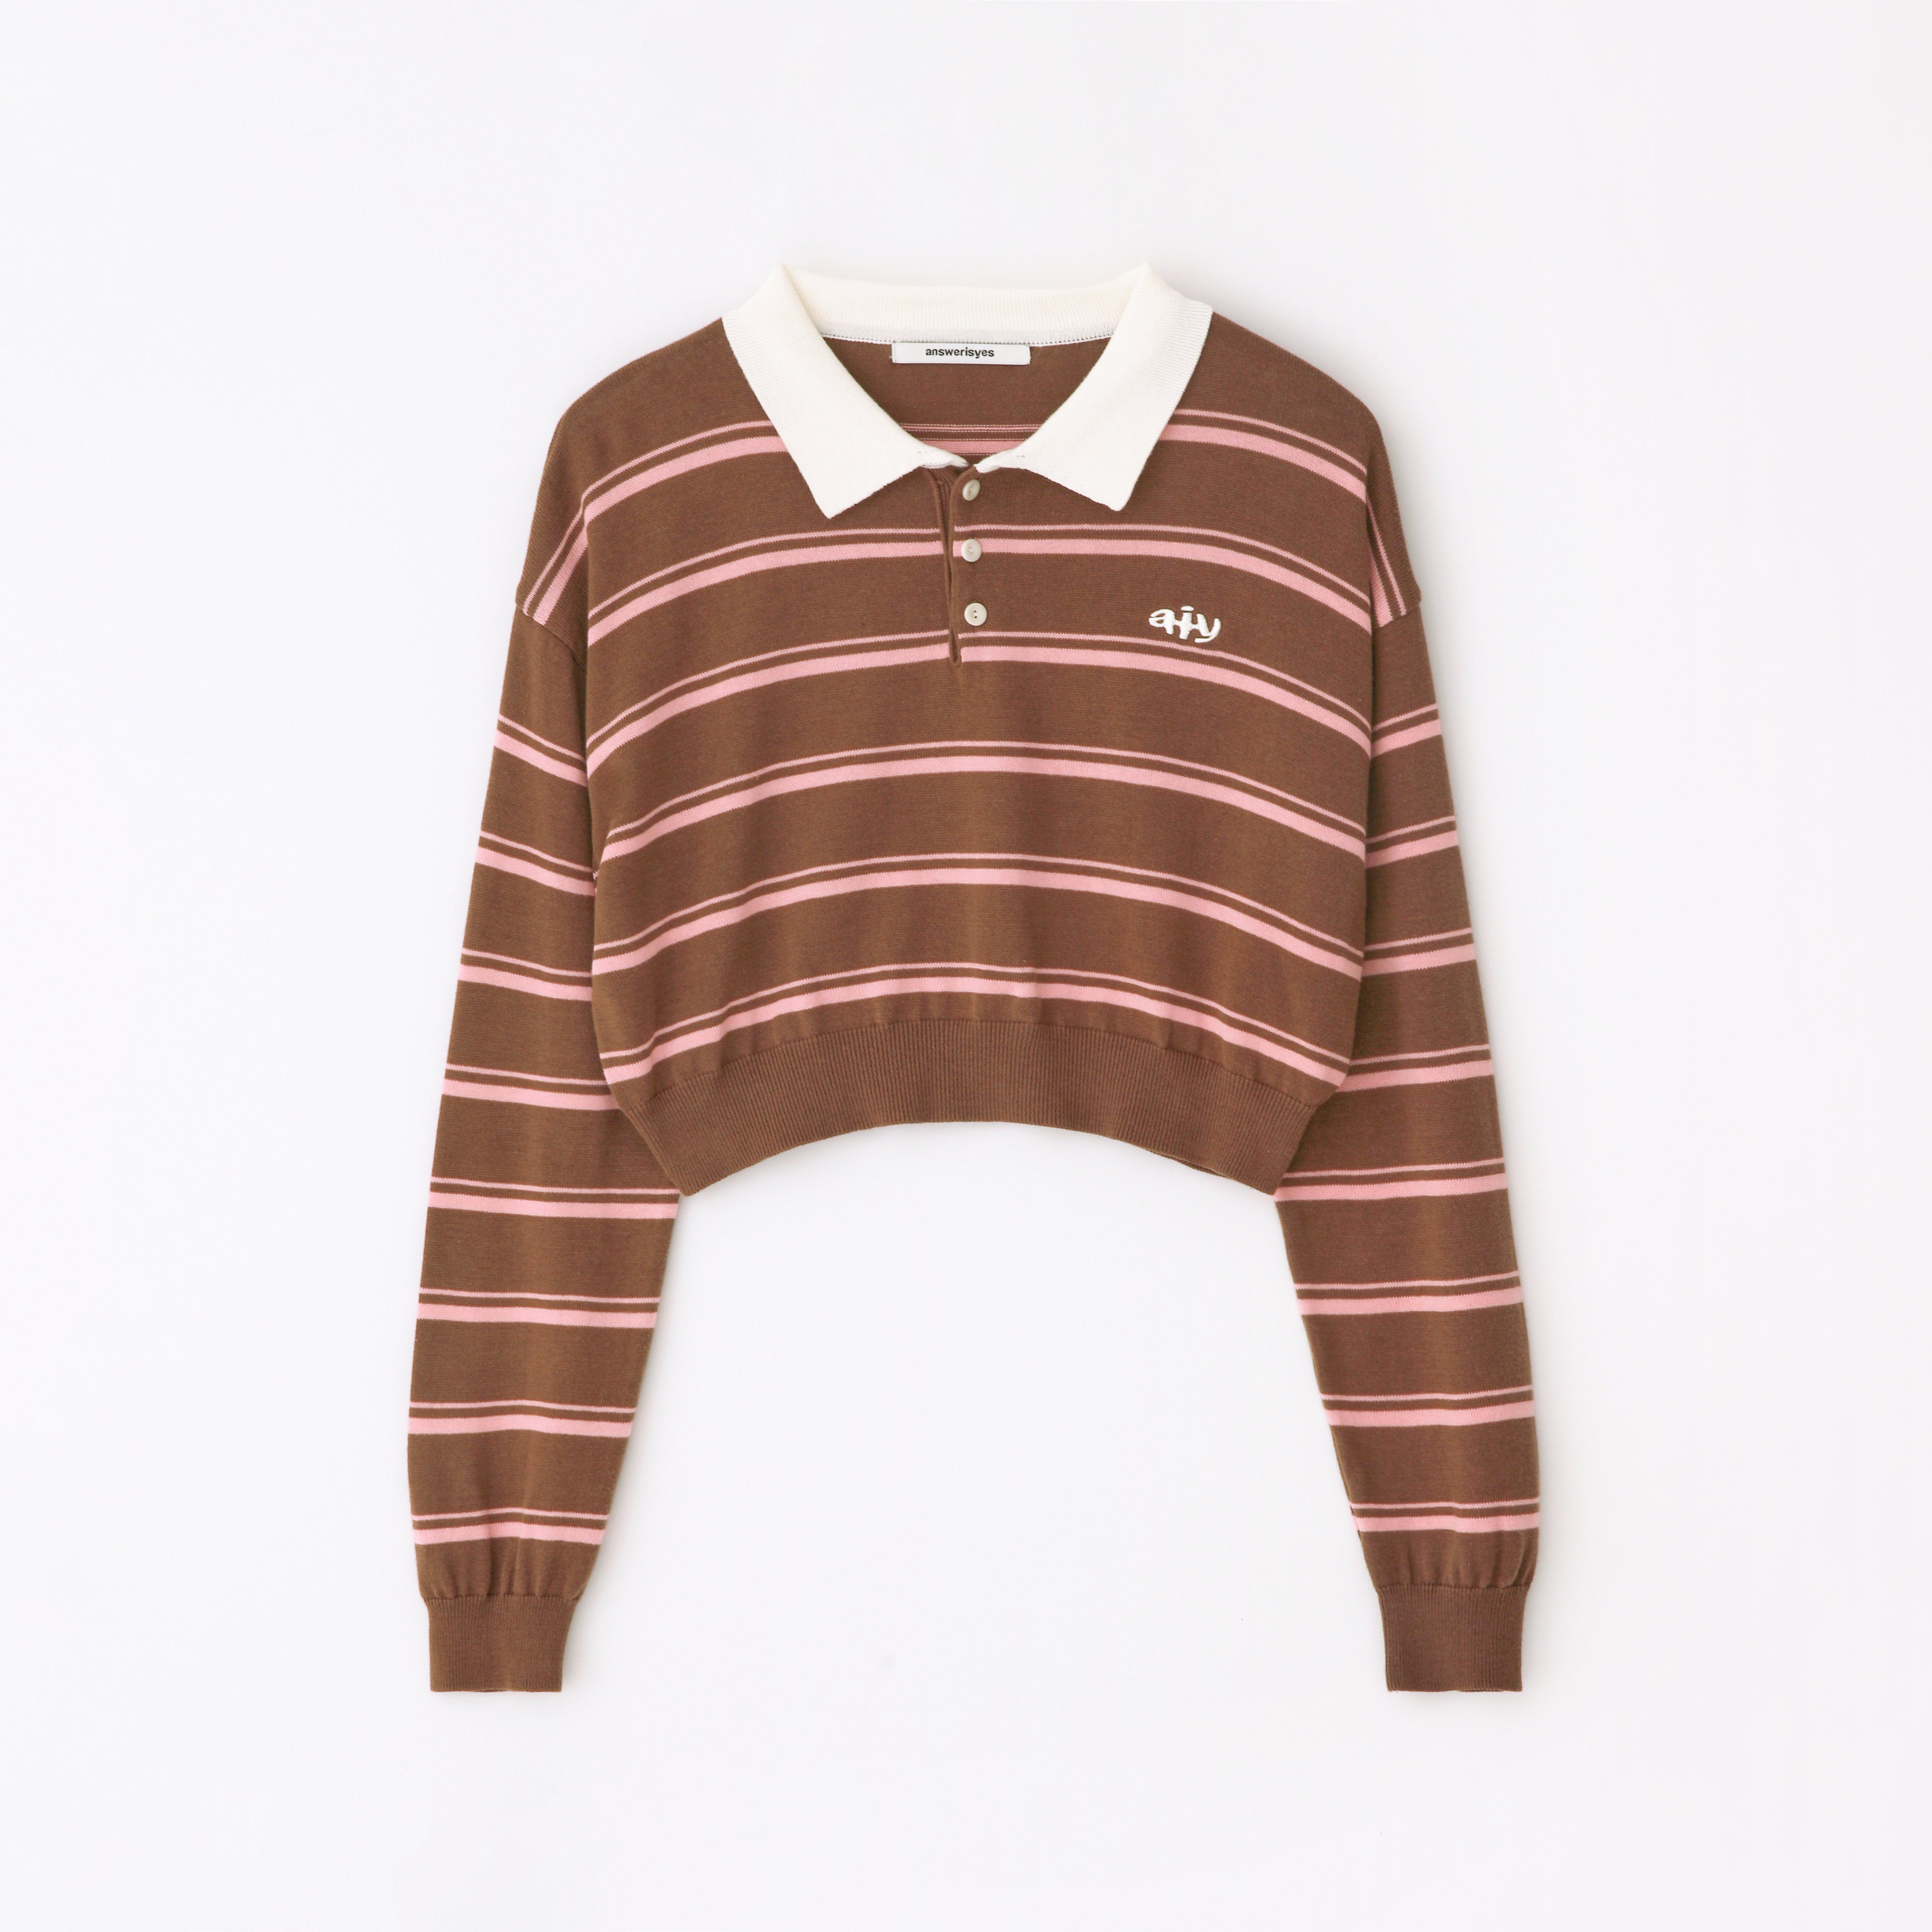 Stripe crop kara top Pink/brown